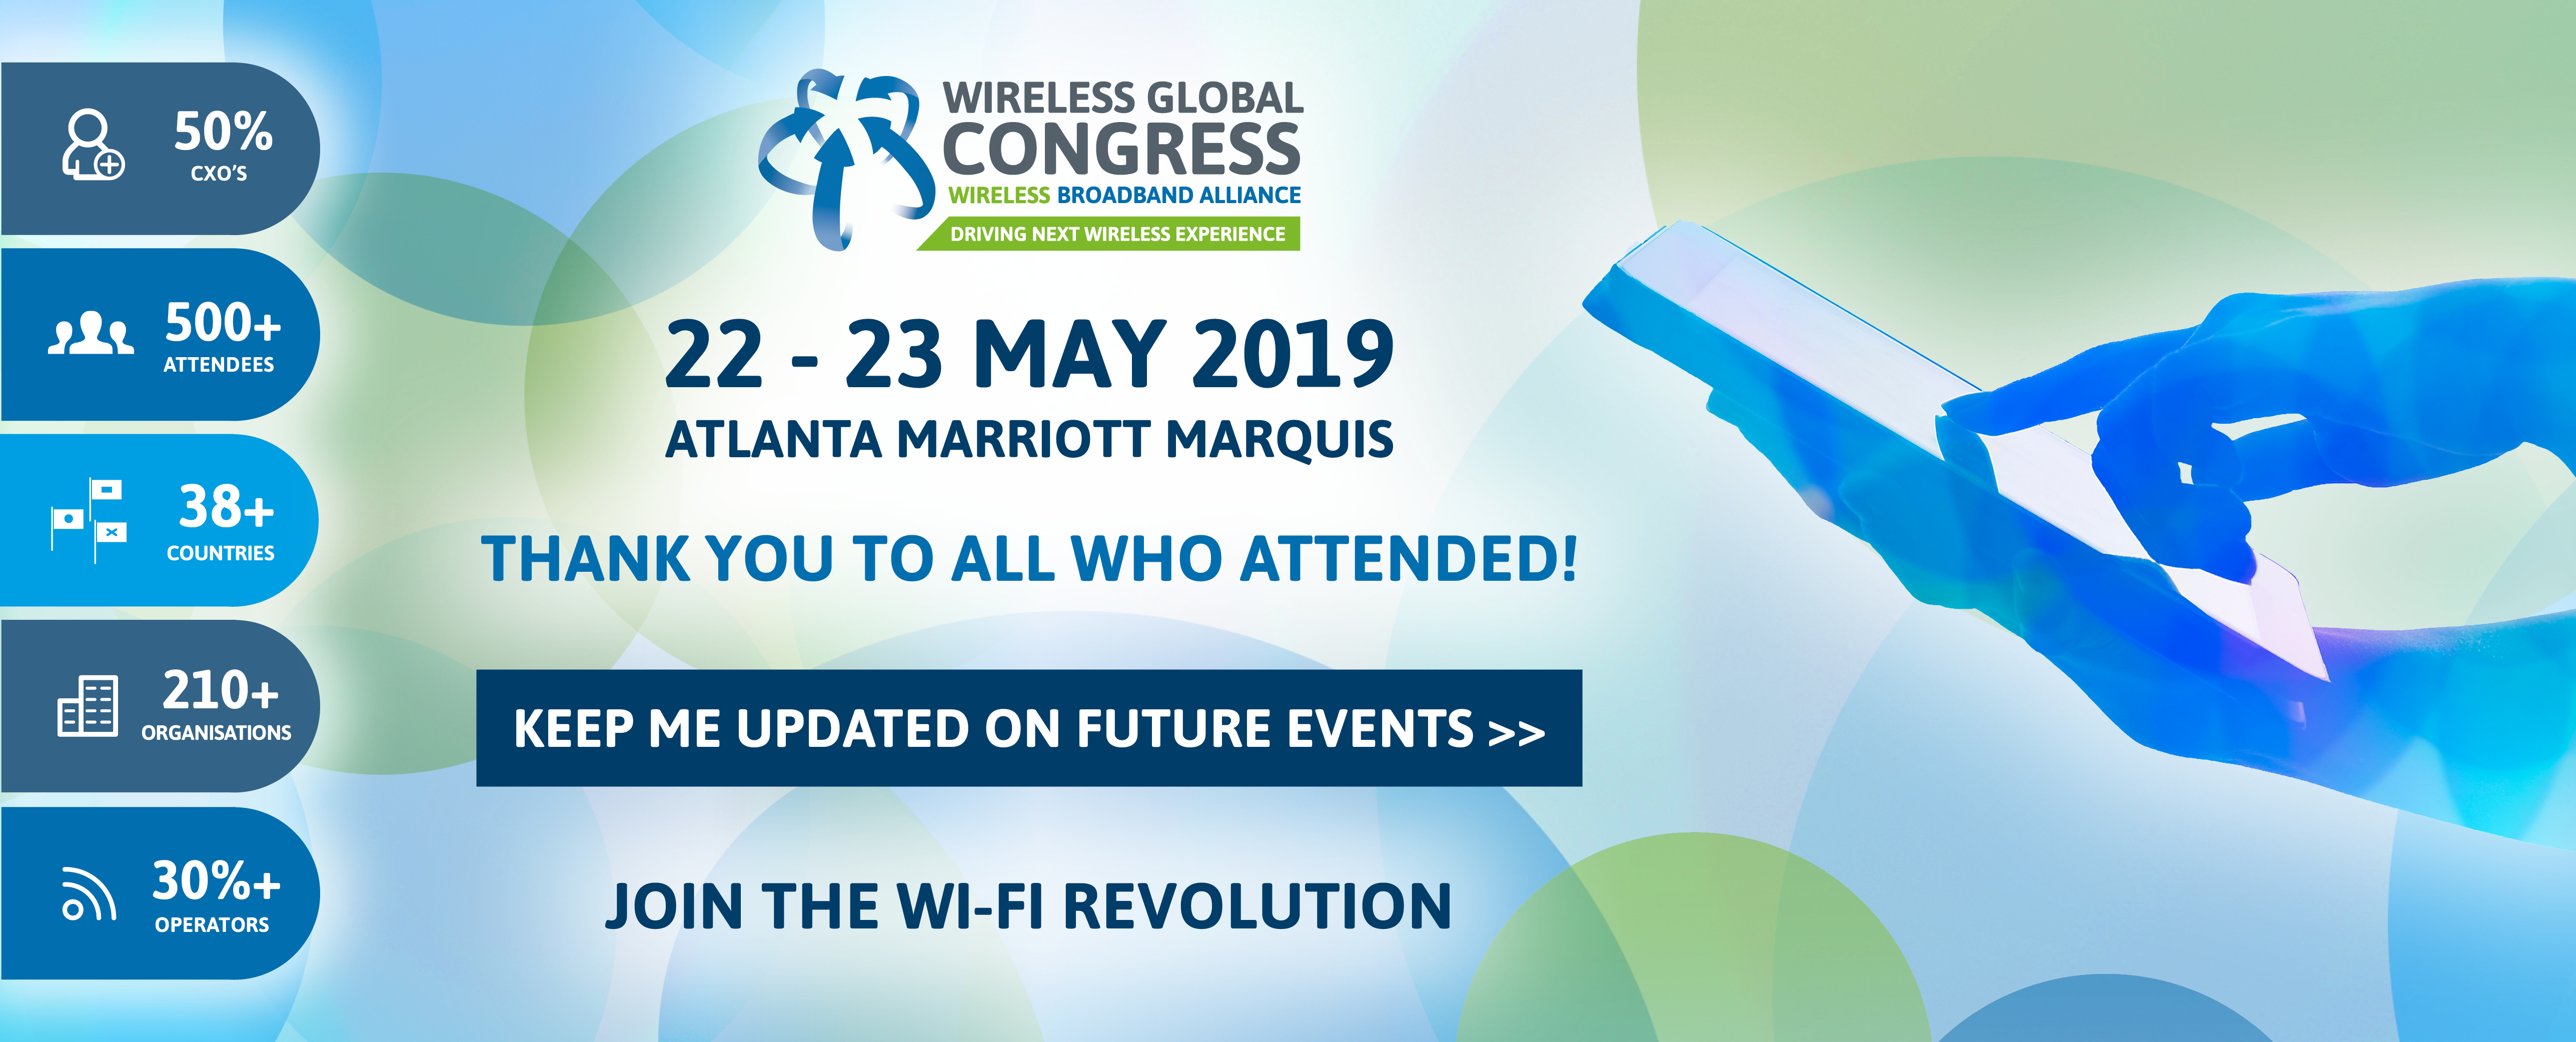 Wireless Broadband Alliance – Wireless Global Congress